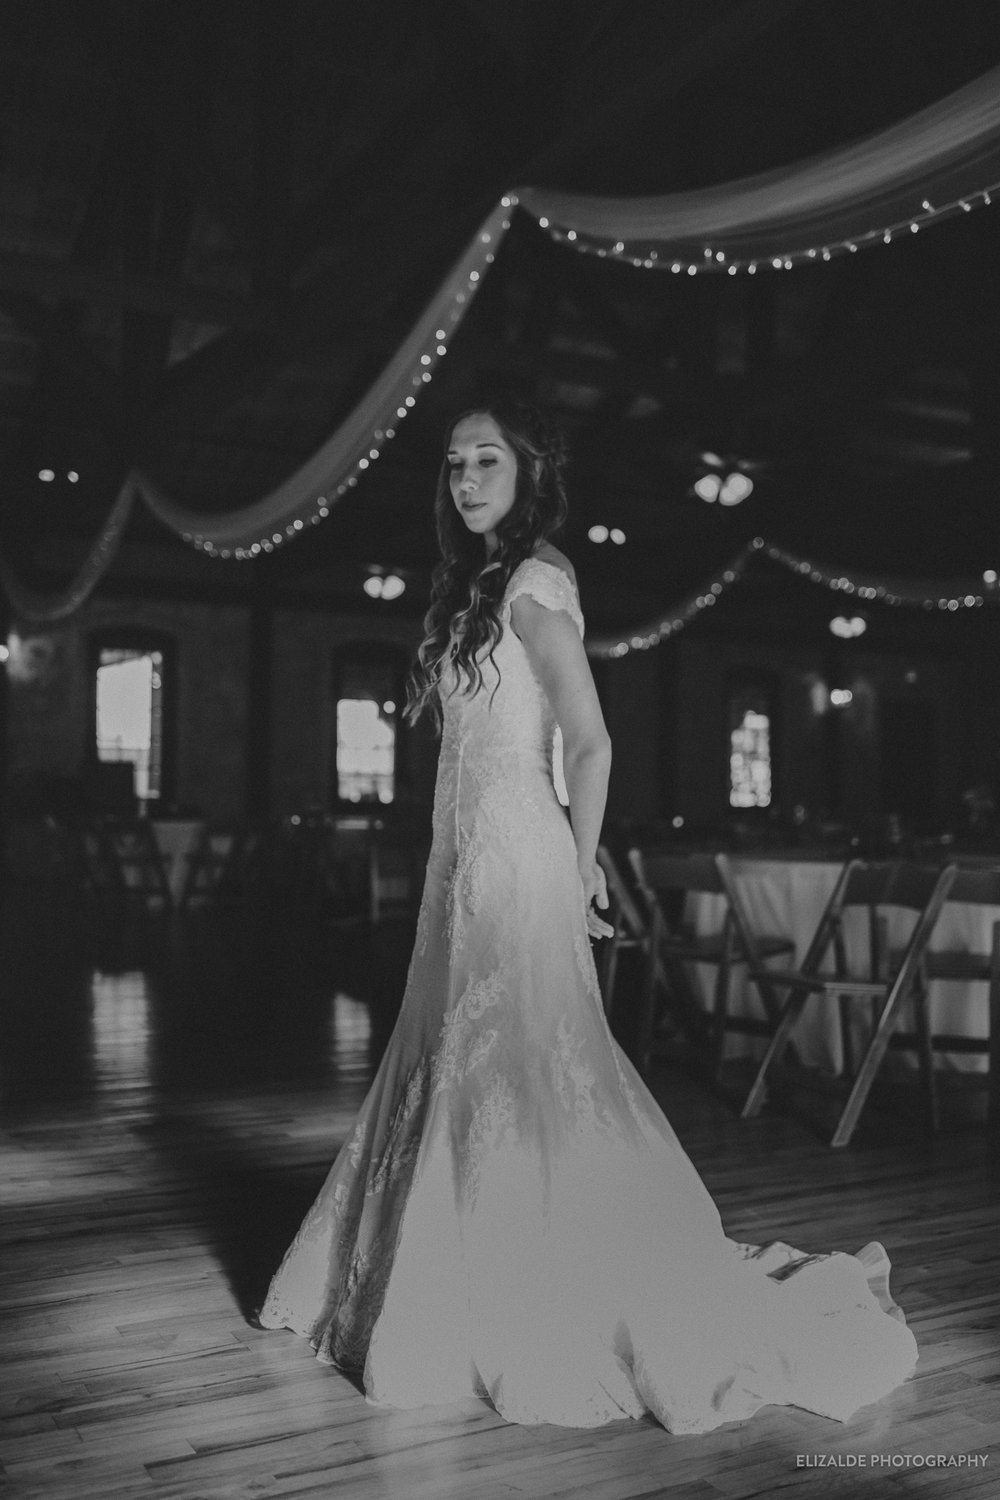 Wedding Photographer Dallas_ DFW Wedding Photographer_elizalde photography_wedding photography (44 of 220).jpg